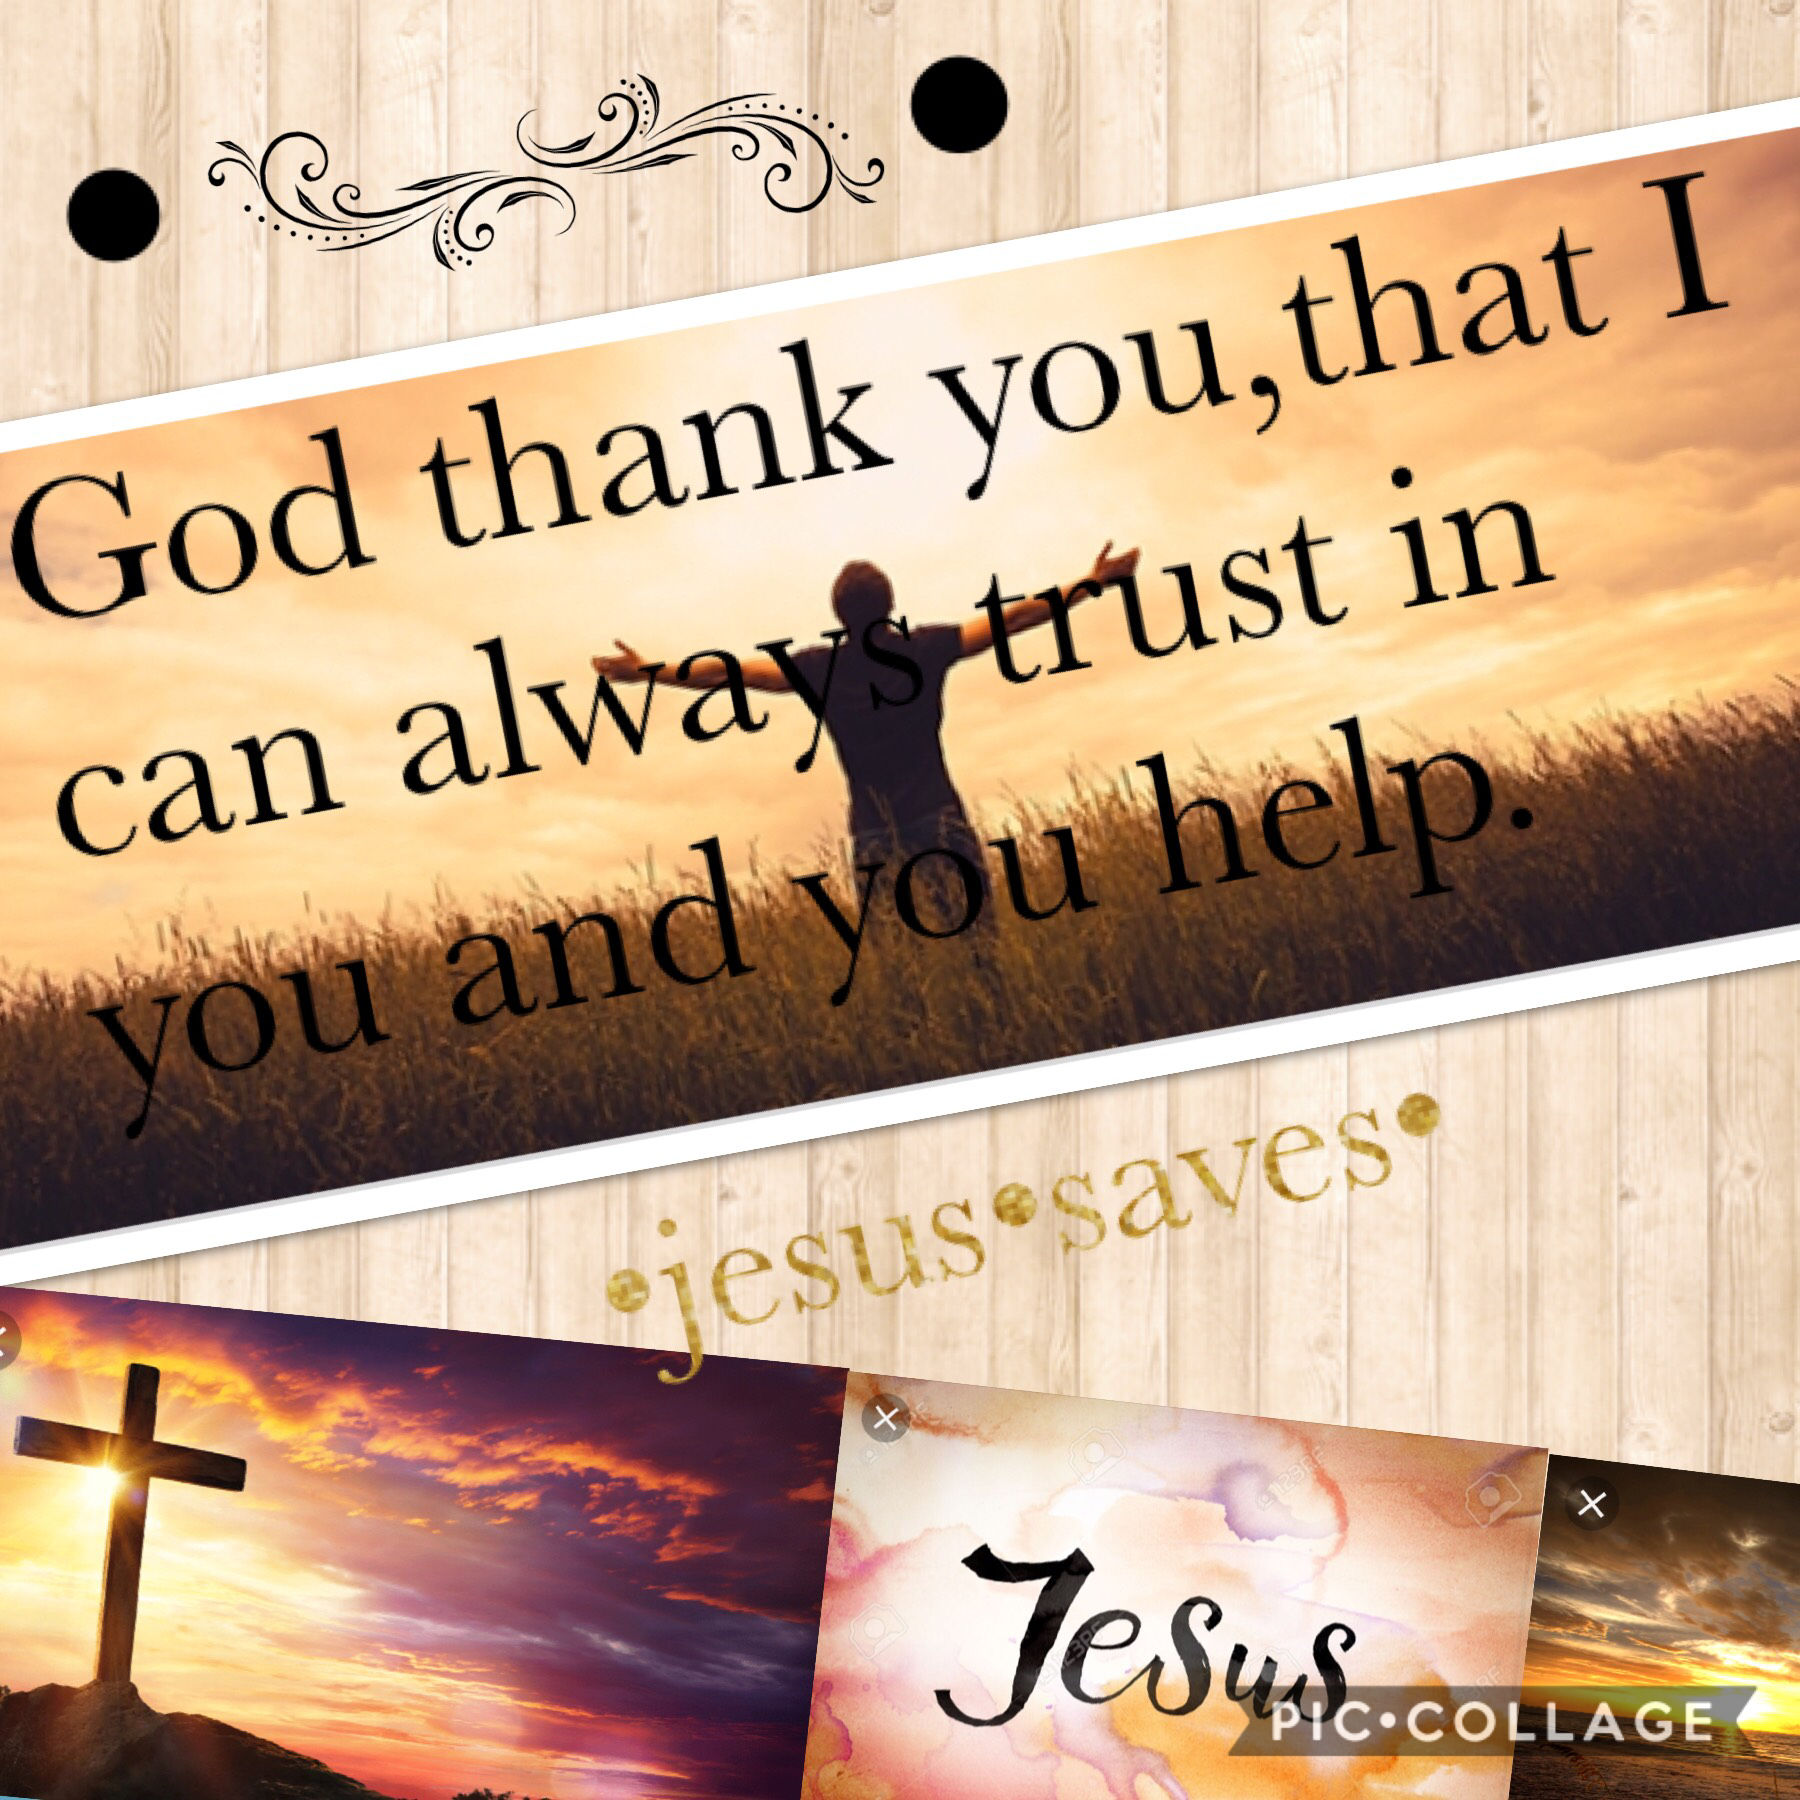 Jesus saves!!❤️God is so good😊